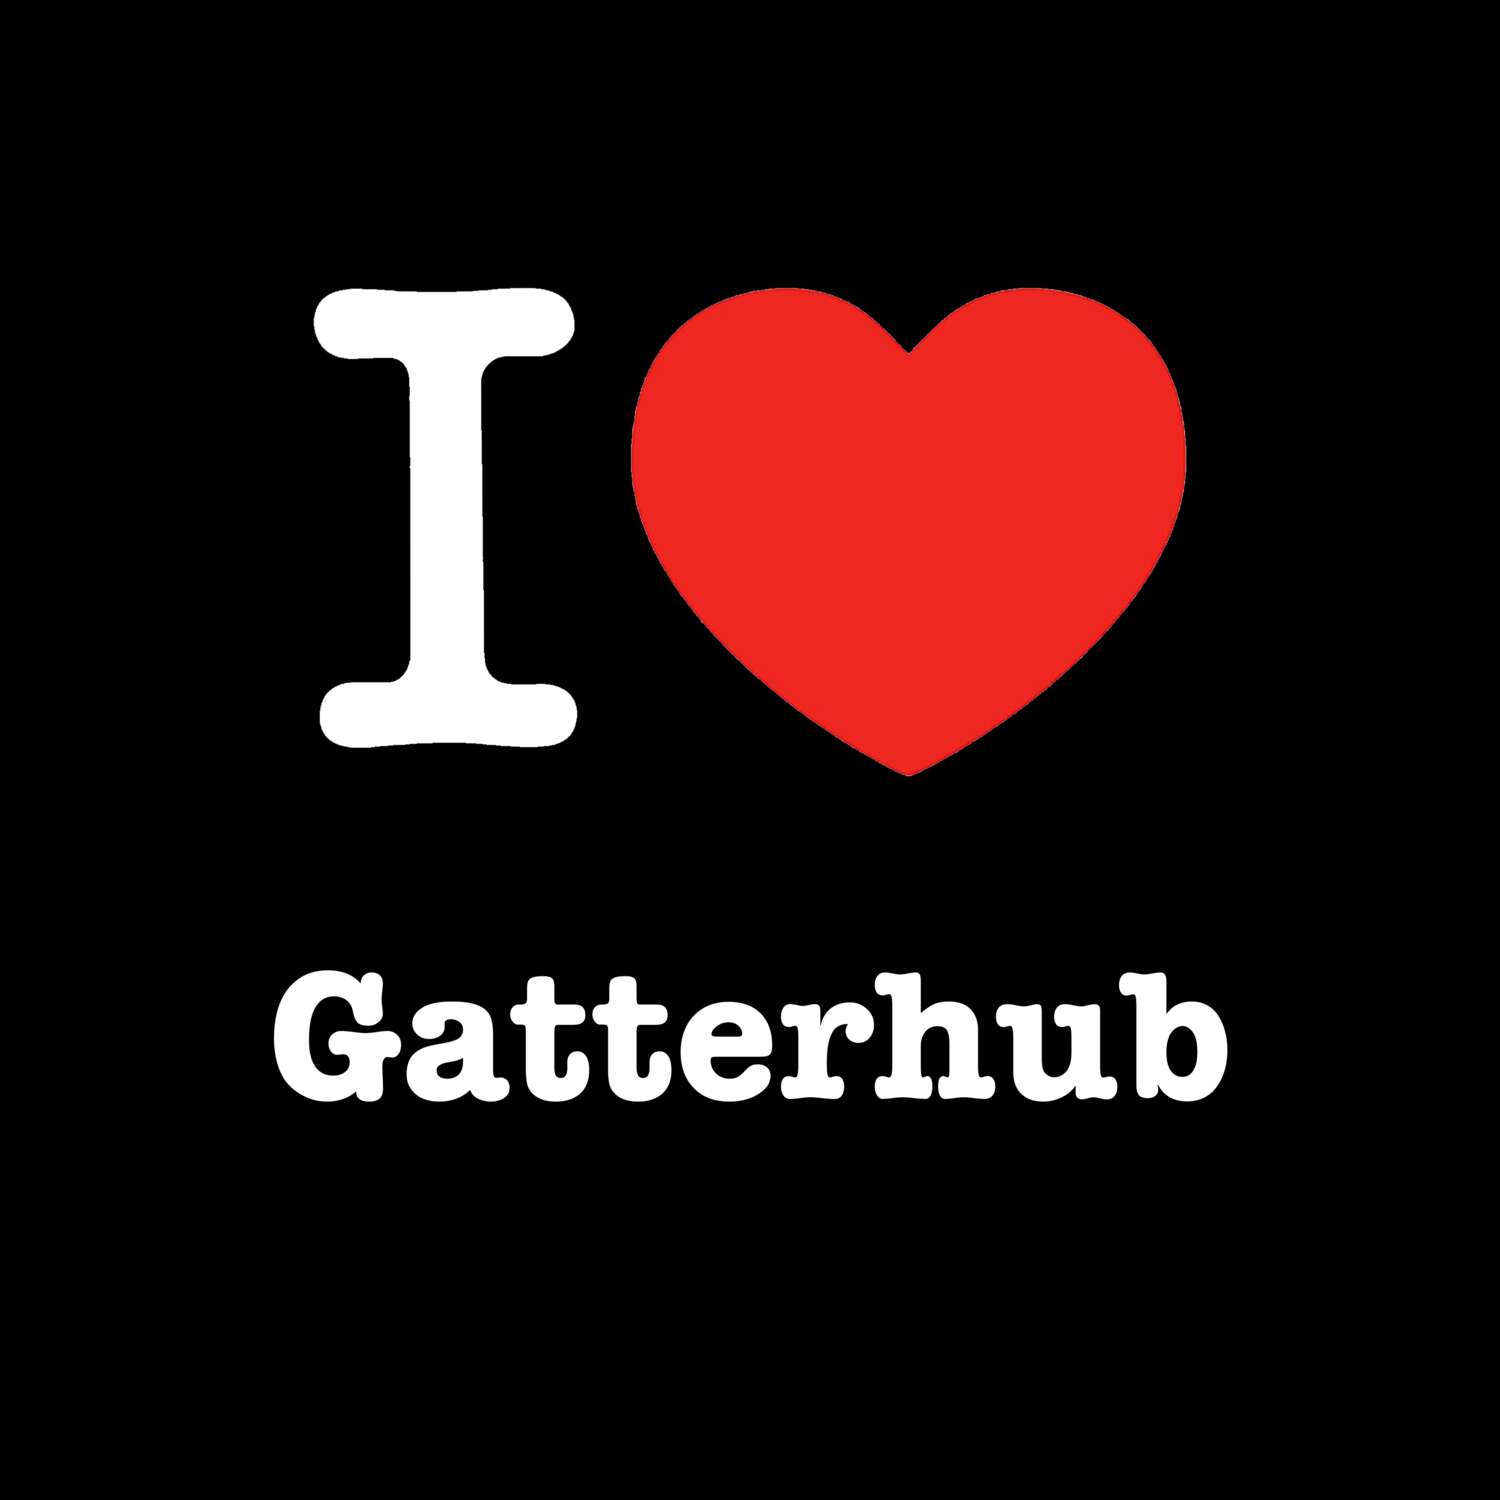 Gatterhub T-Shirt »I love«